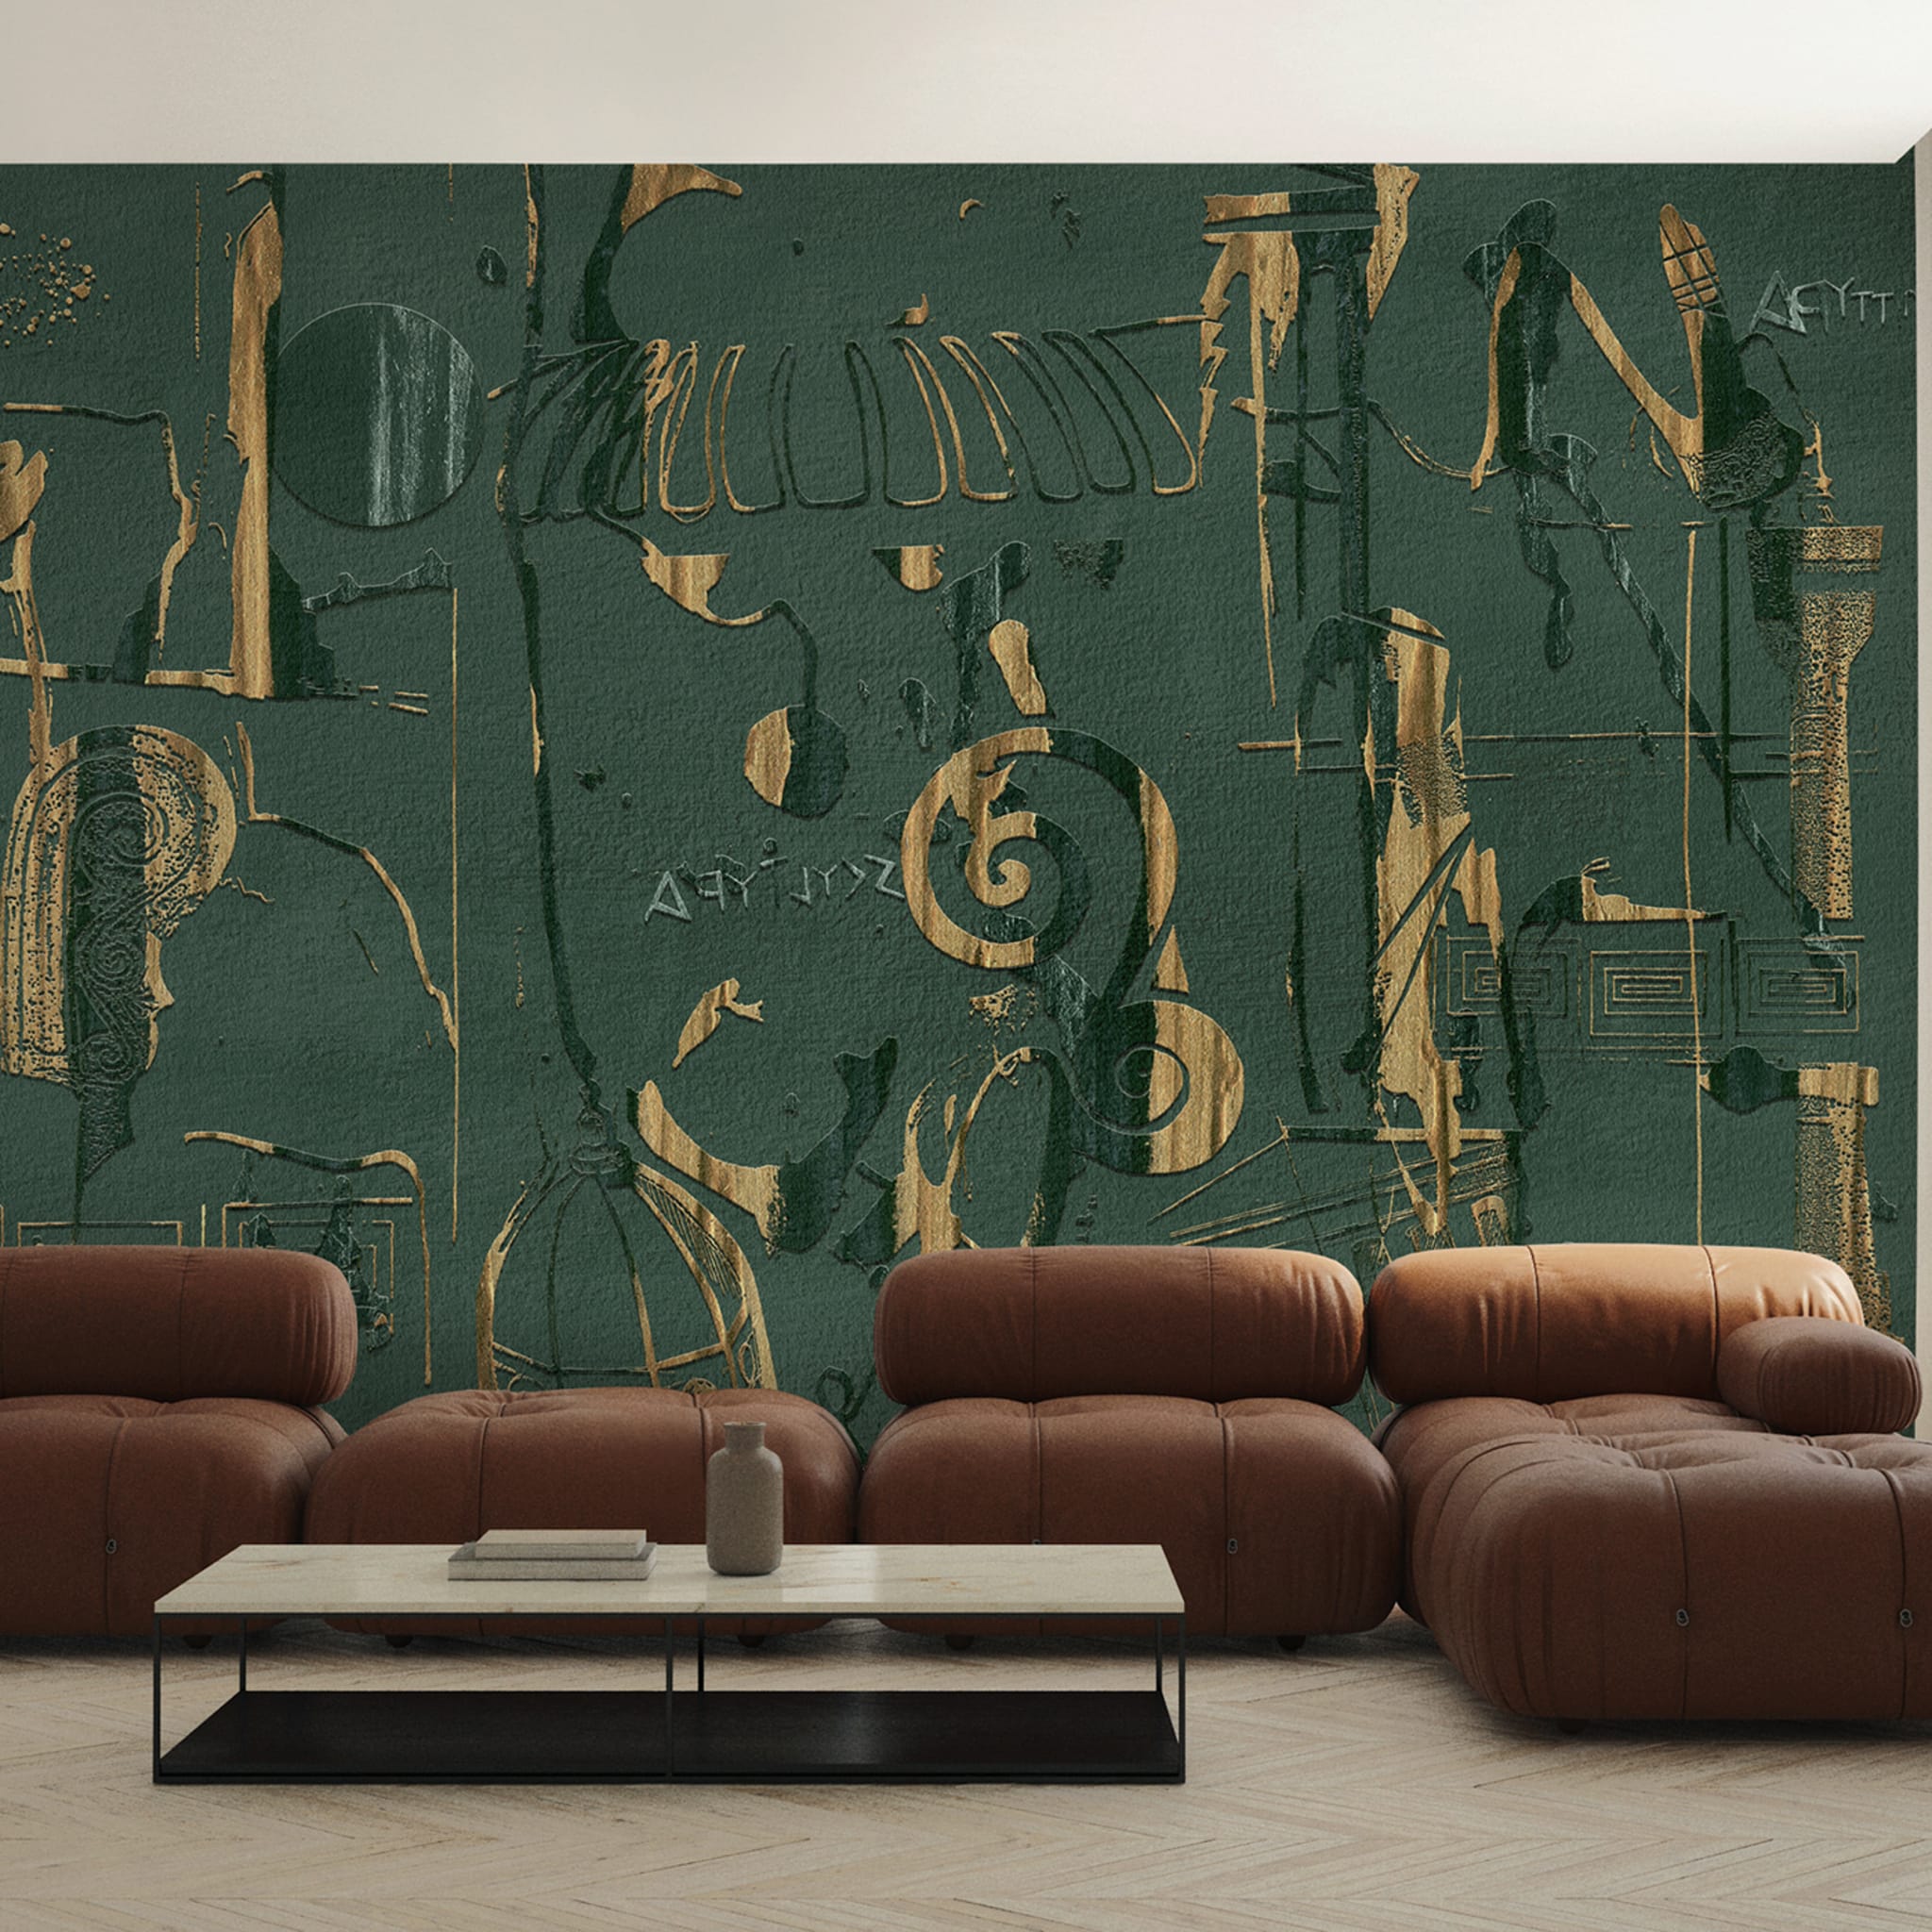 Green greek decoration textured wallpaper  - Alternative view 1